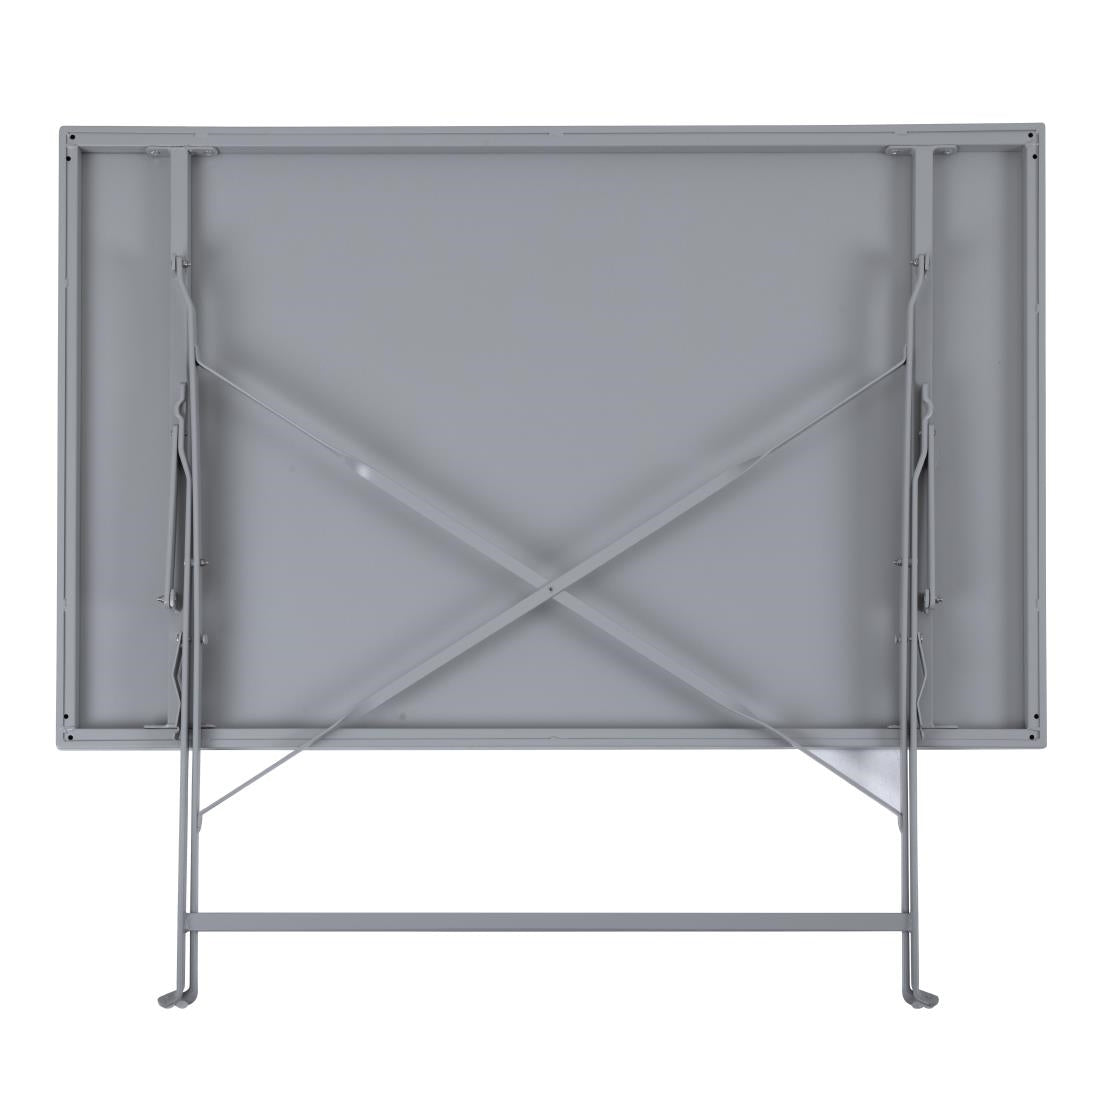 CH969 Bolero Pavement Style Folding Table Grey 1100mm x 700mm JD Catering Equipment Solutions Ltd